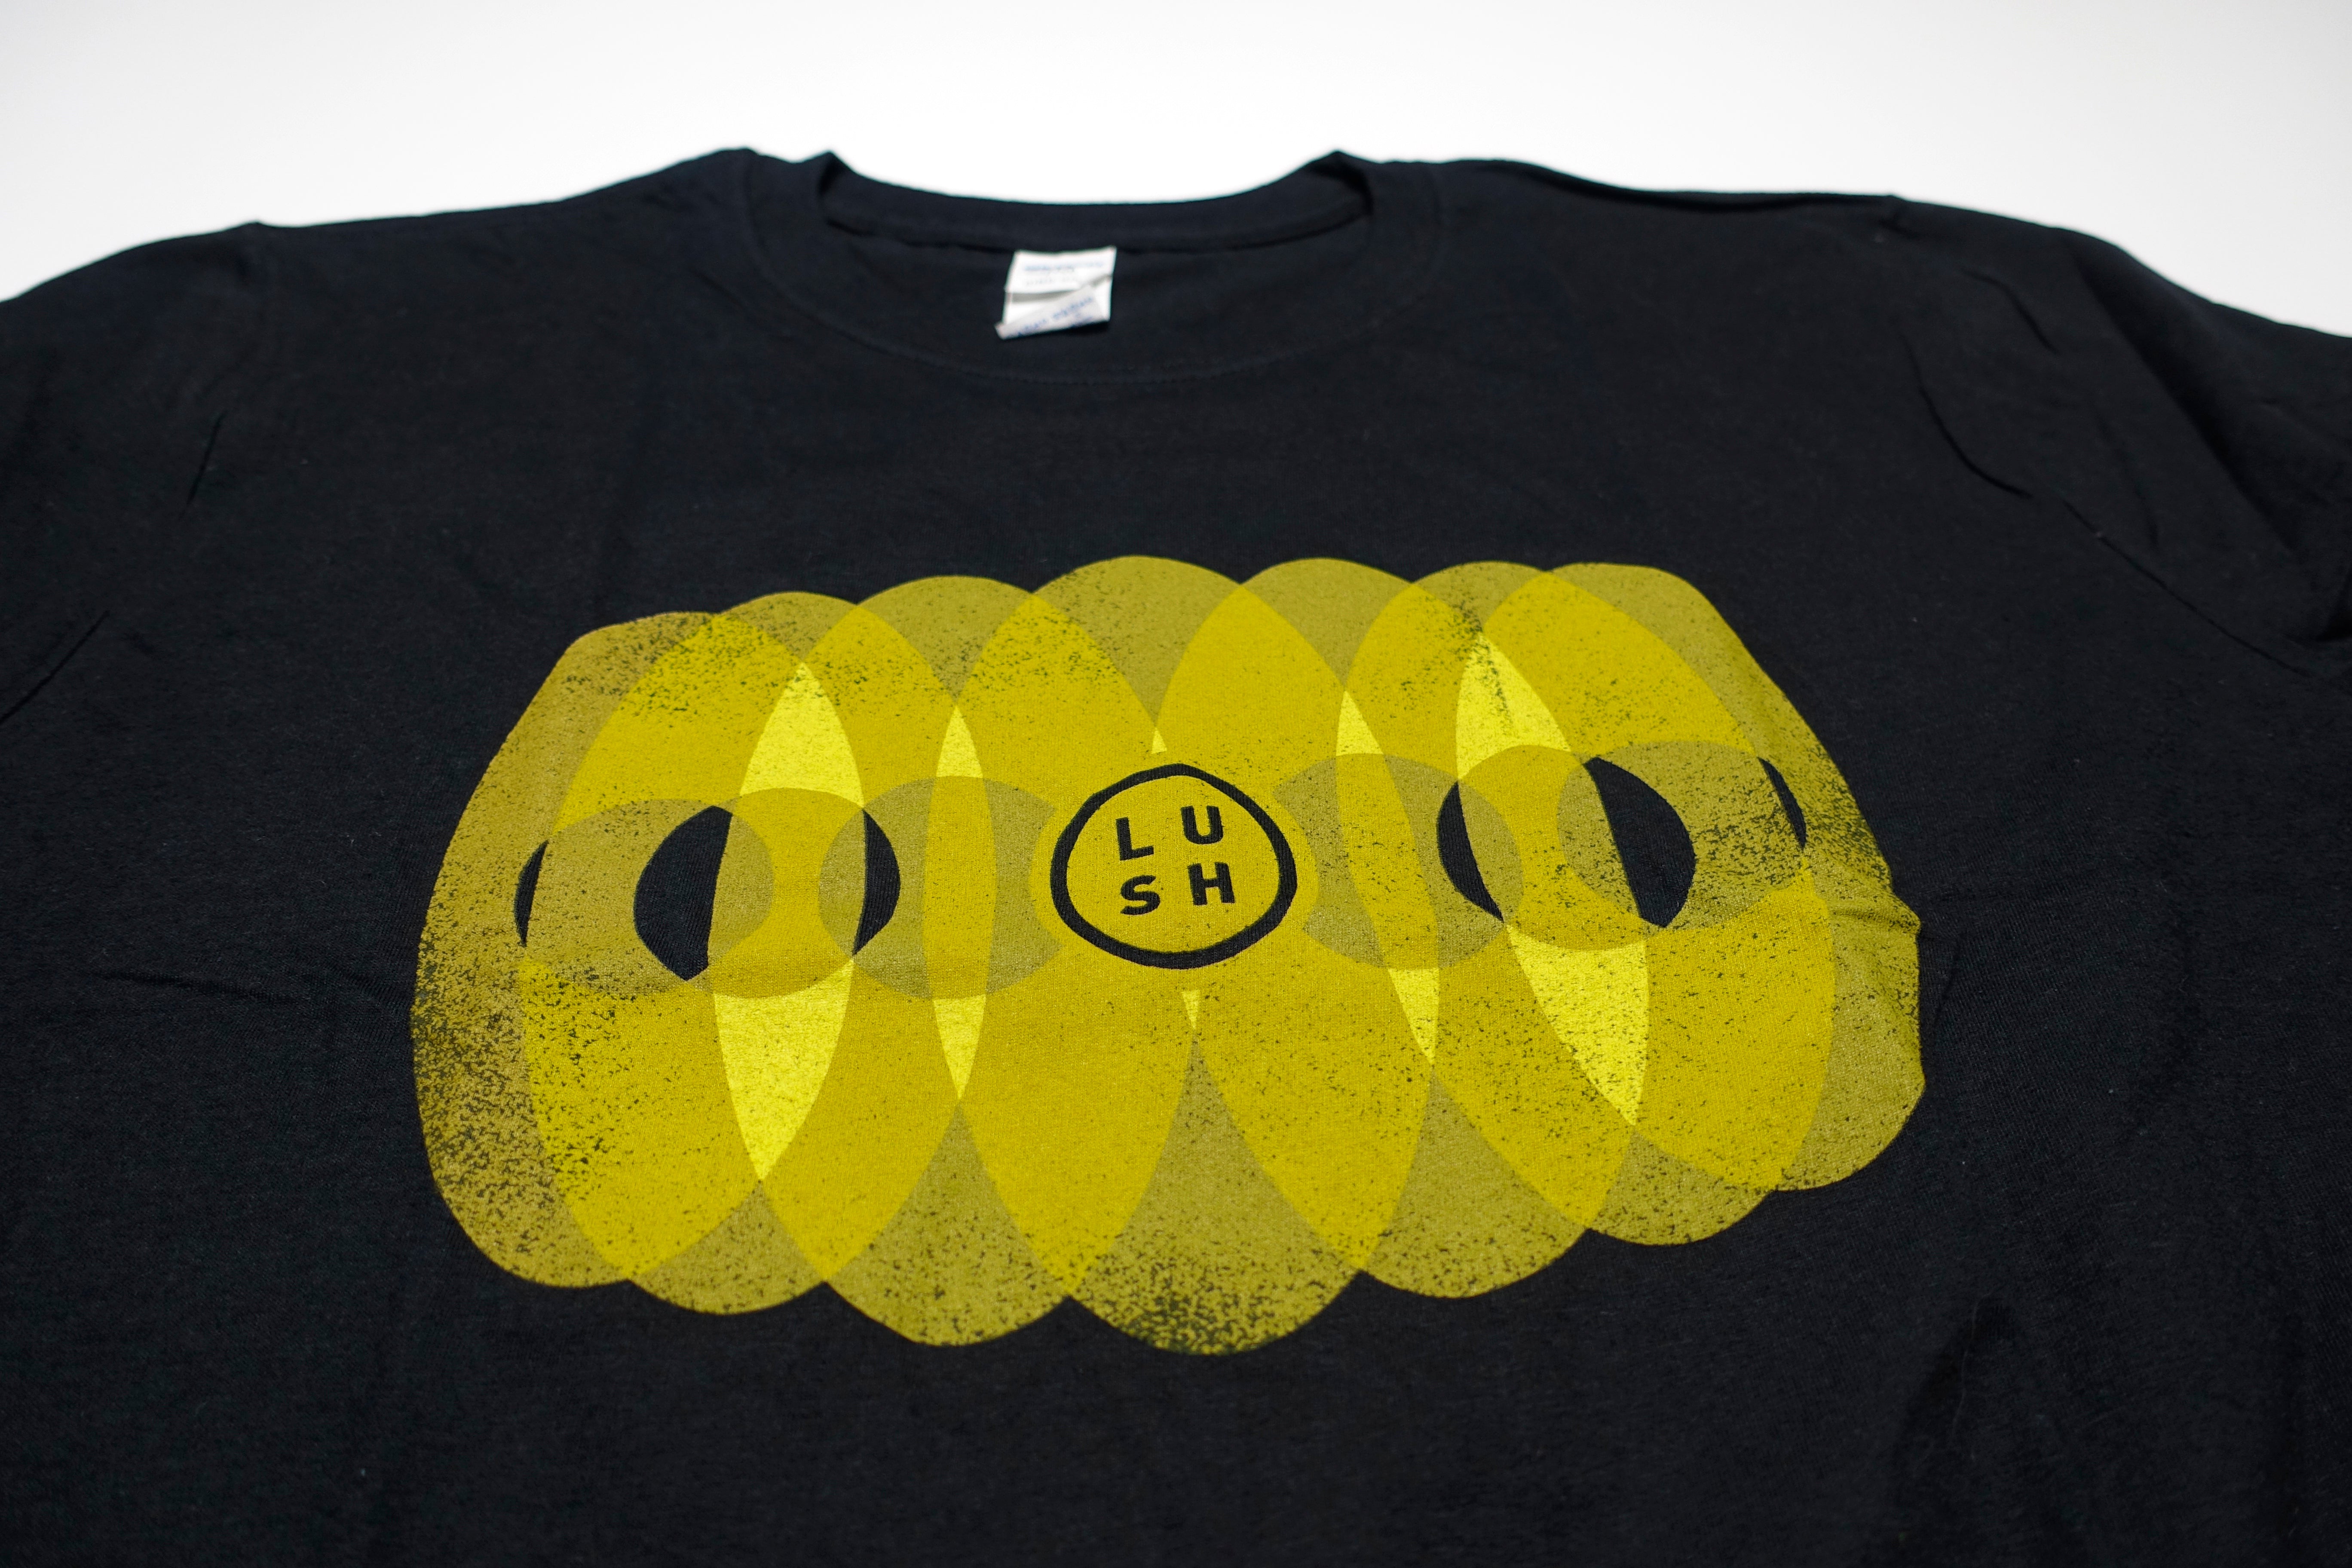 Lush - Yellow Circles 2016 Tour Shirt Size Large